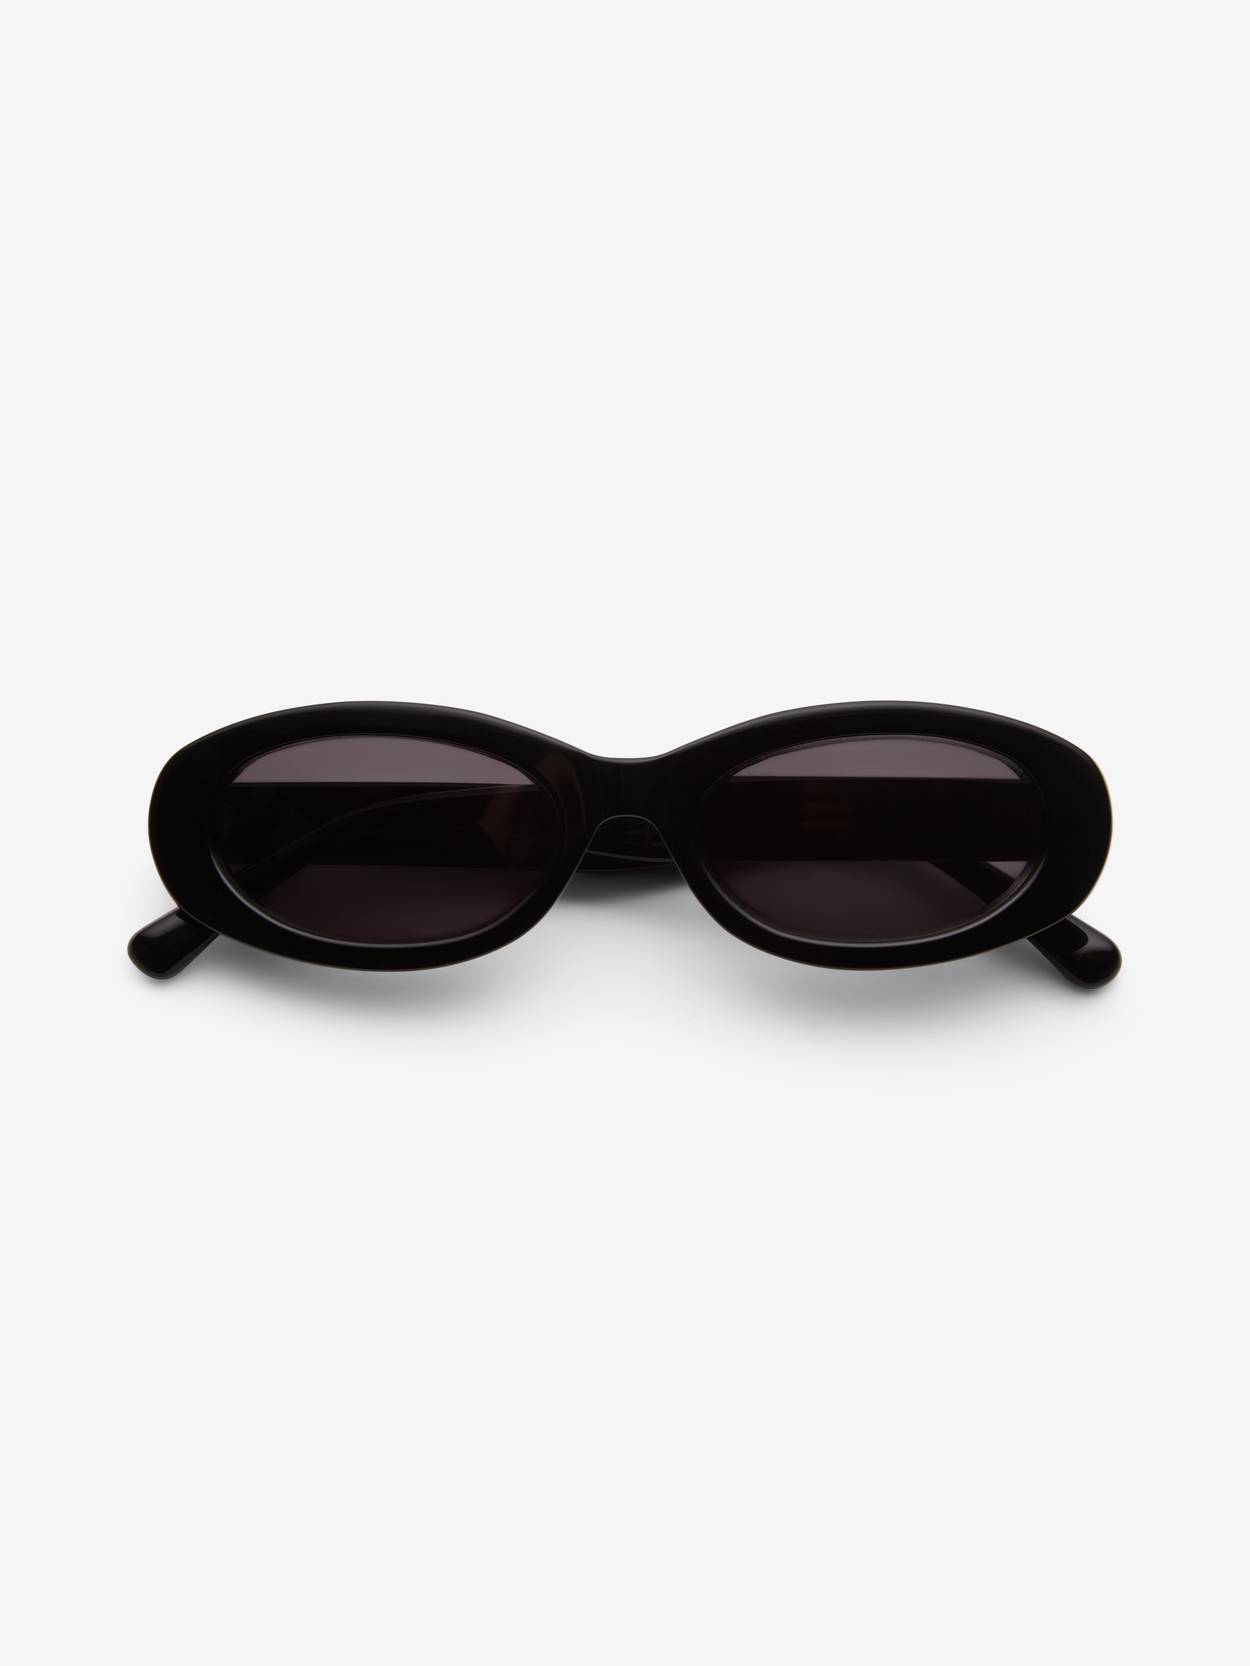 Wide oval sunglasses